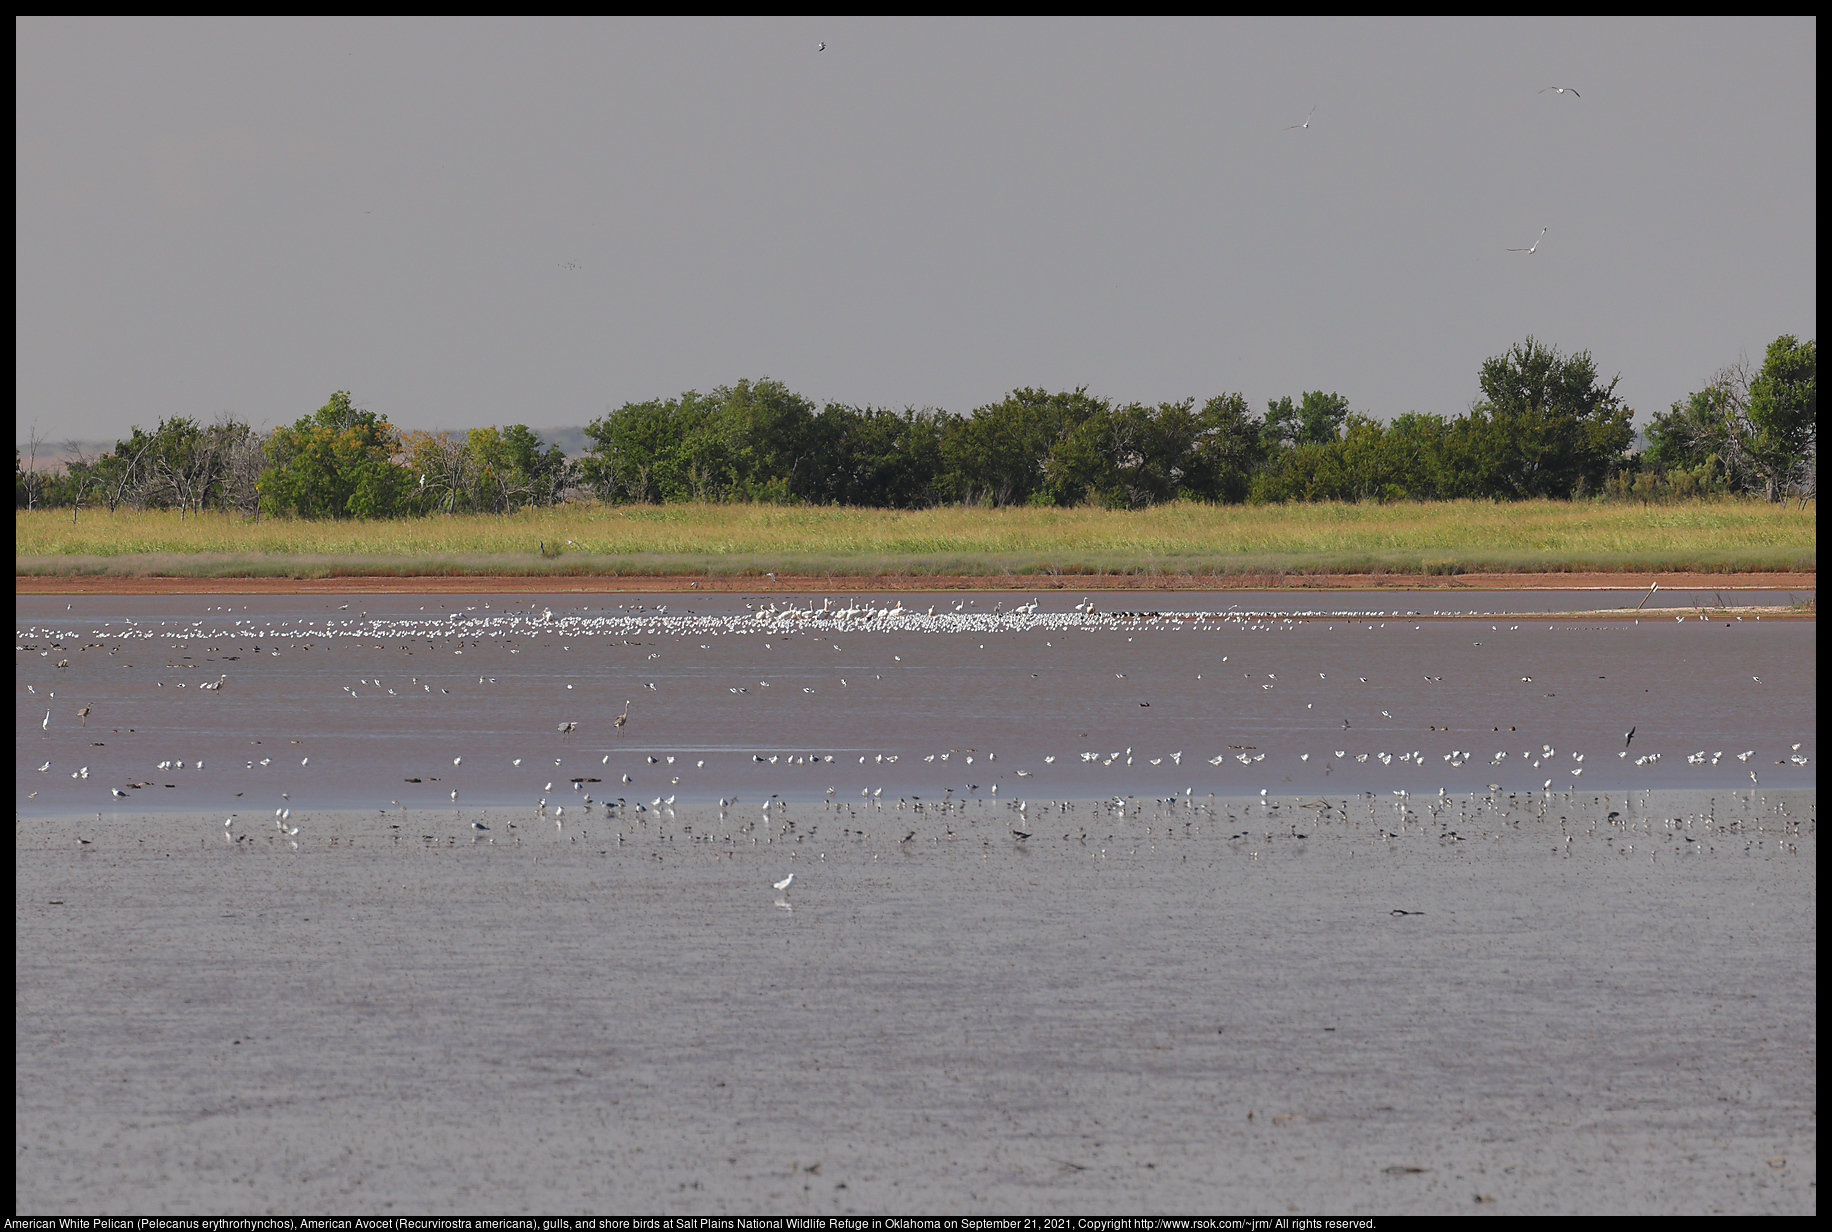 American White Pelican (Pelecanus erythrorhynchos), American Avocet (Recurvirostra americana), gulls, and shore birds at Salt Plains National Wildlife Refuge in Oklahoma on September 21, 2021